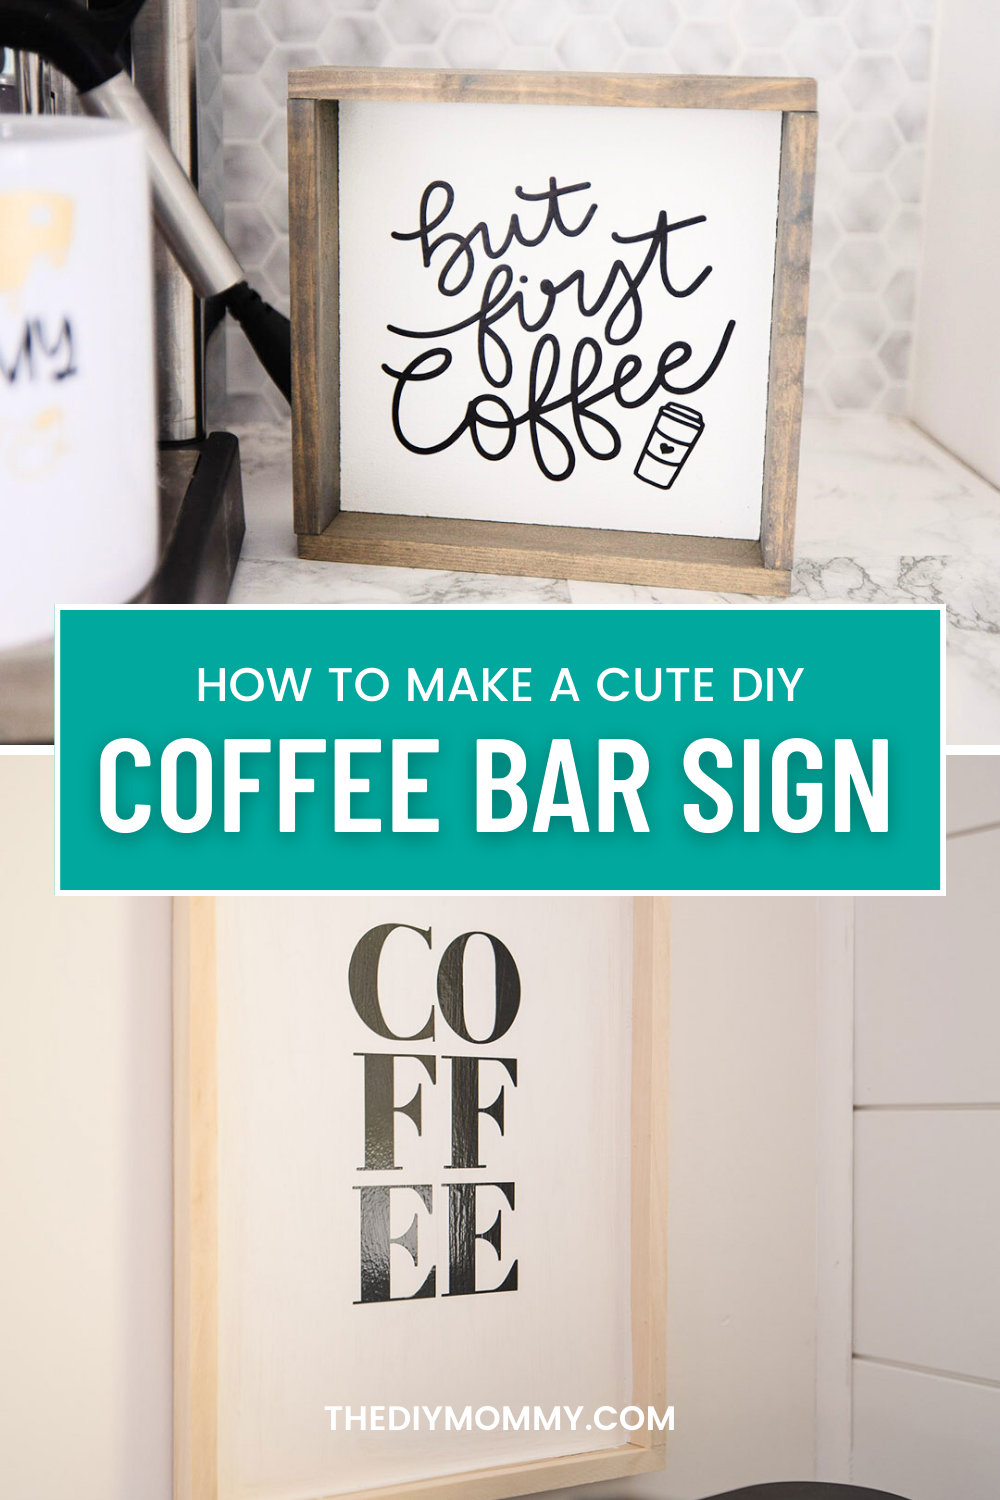 How to make a cute coffee bar sign